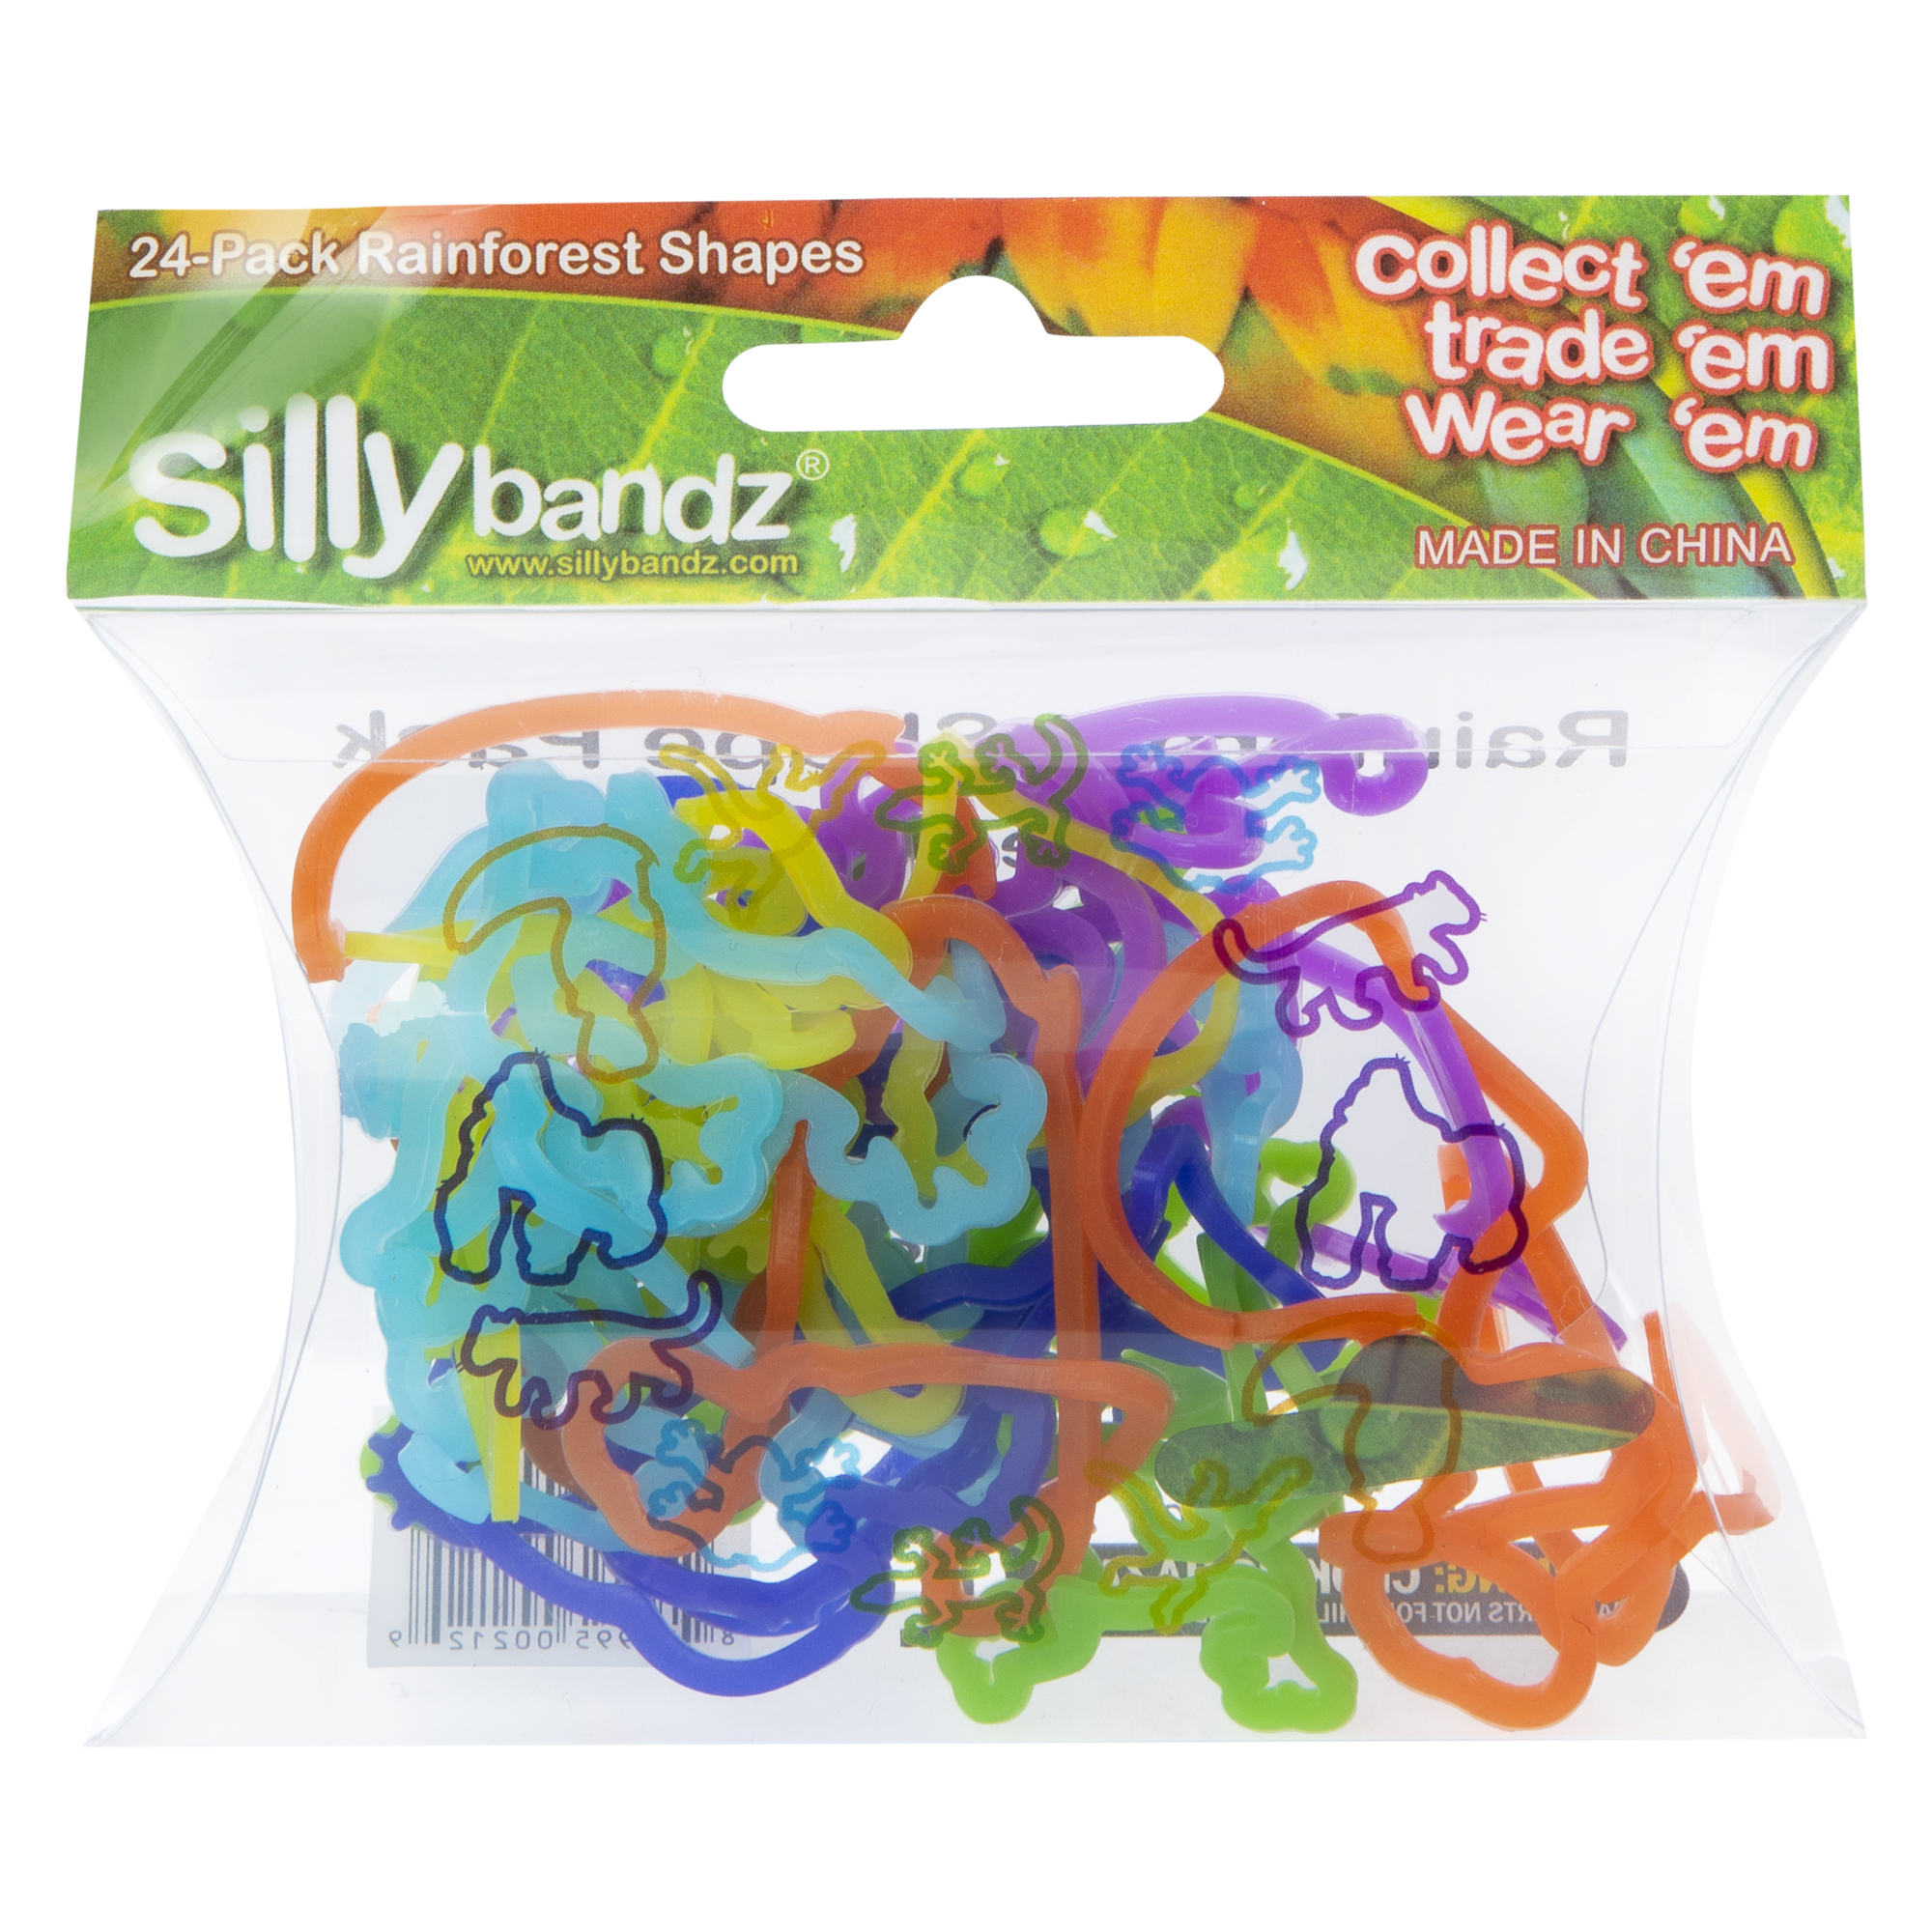 sillybandz® rainforest shapes 24-pack